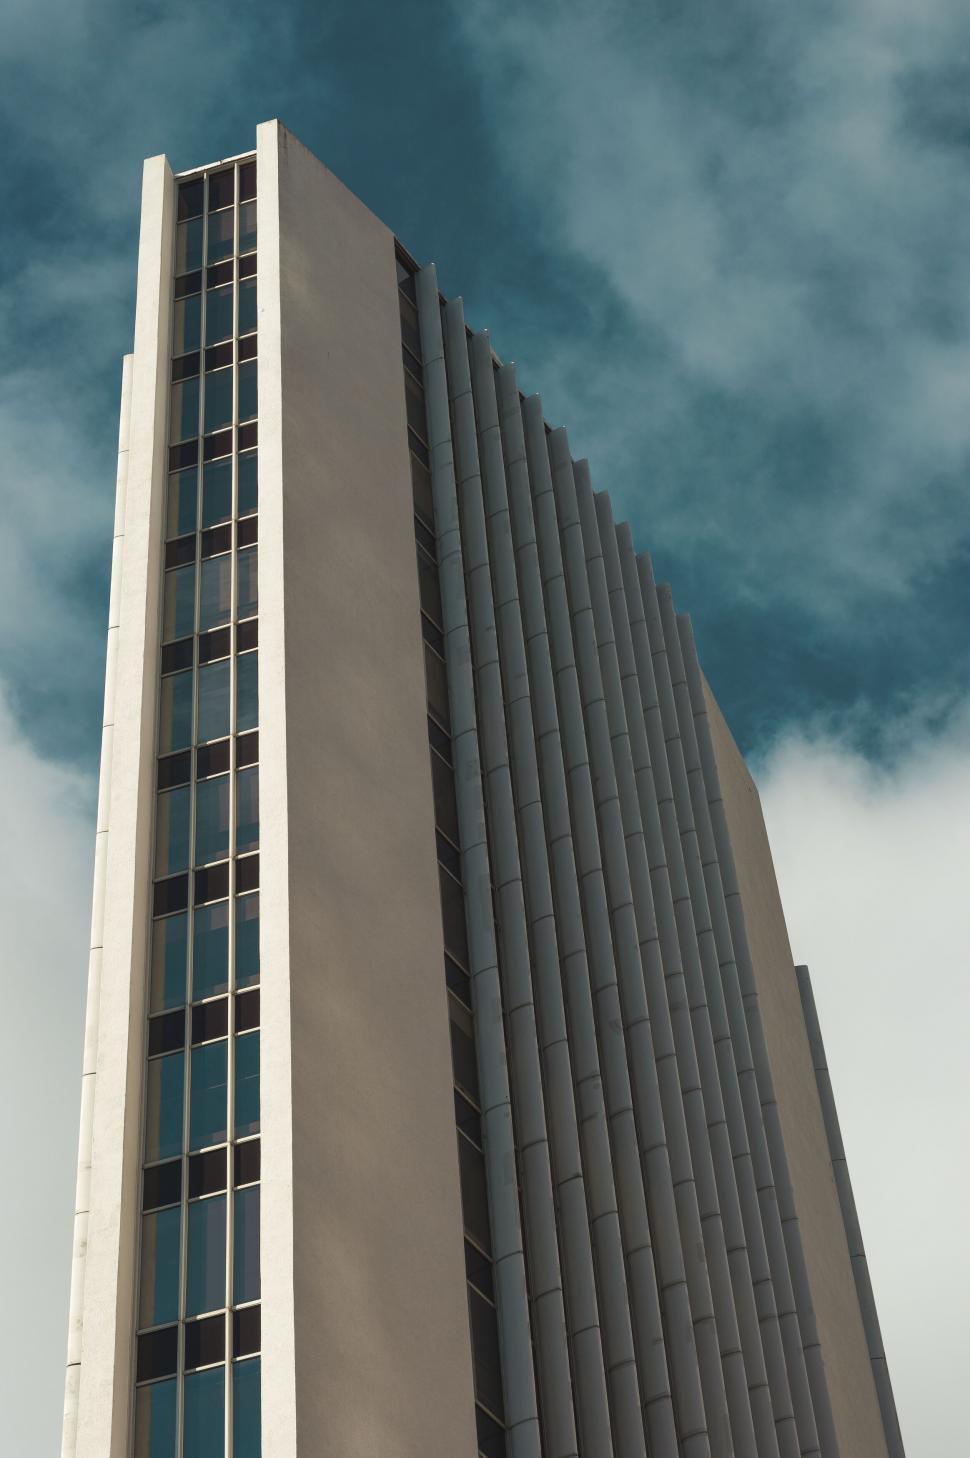 Free Image of Modern skyscraper against blue sky 